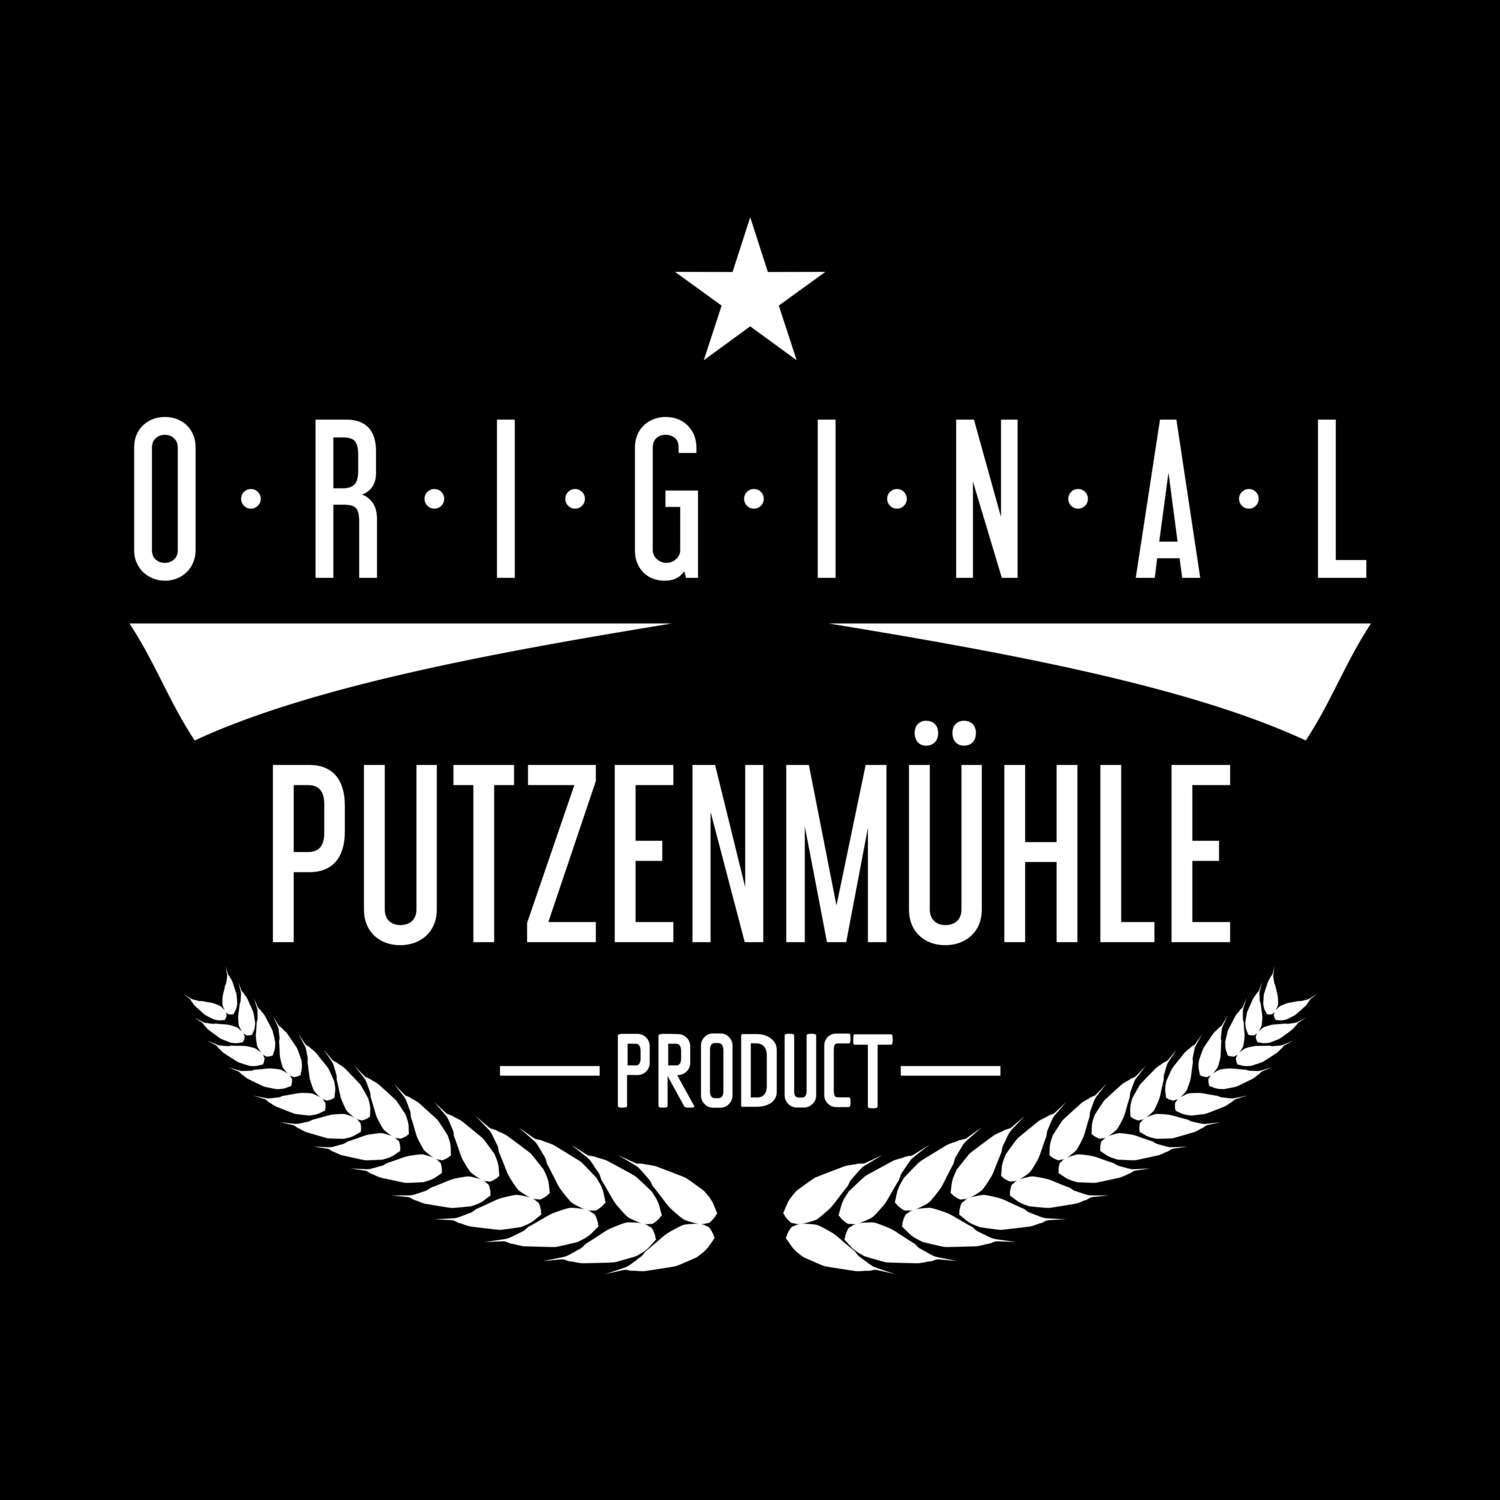 Putzenmühle T-Shirt »Original Product«